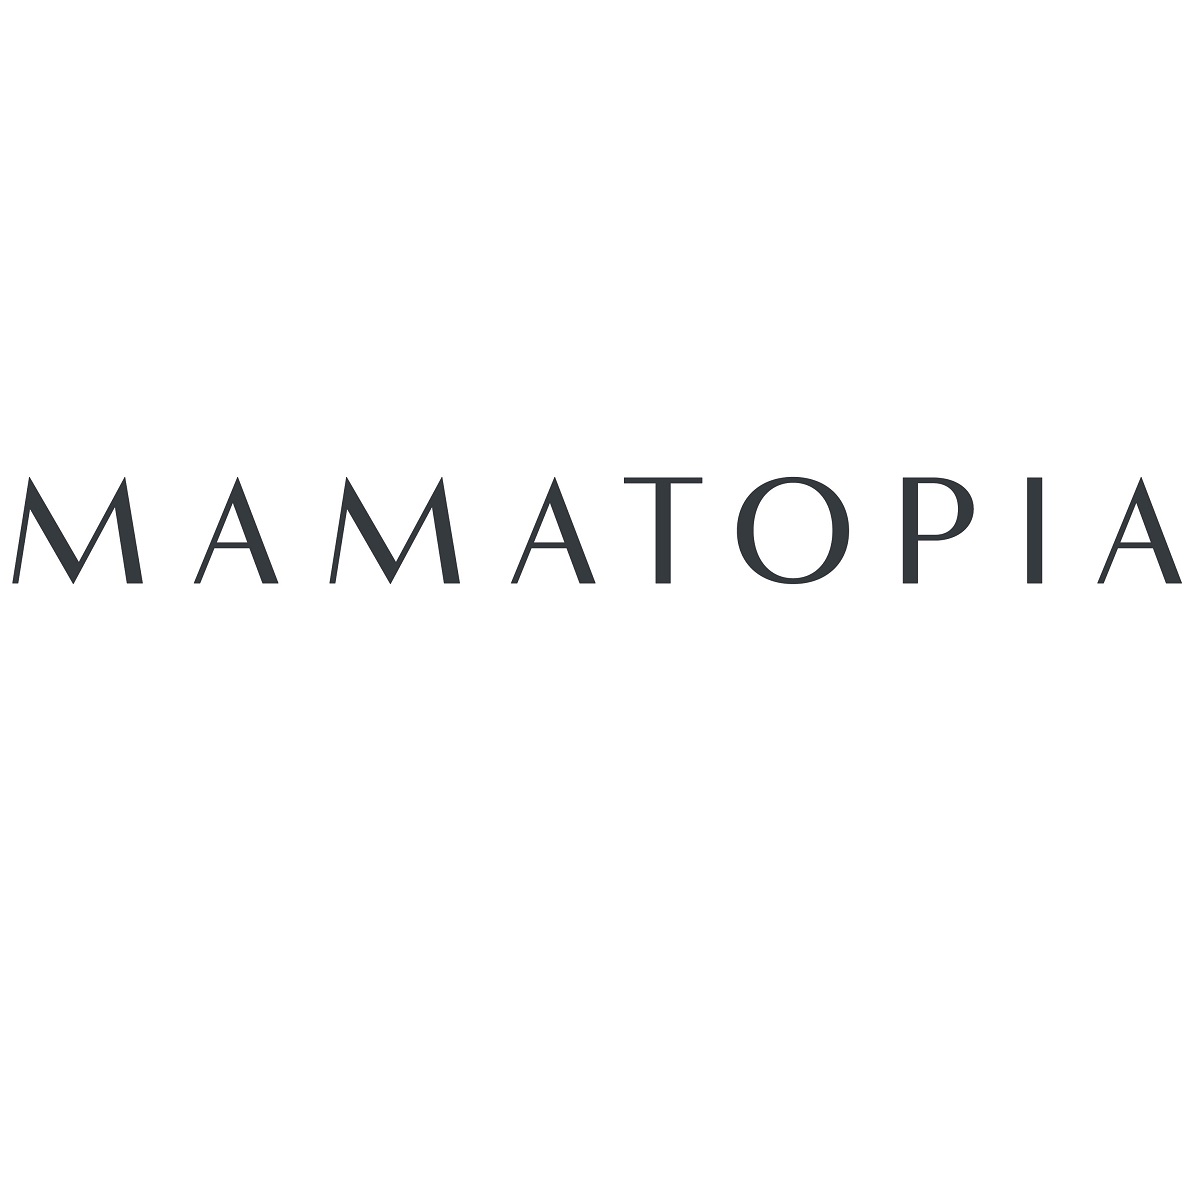 Mamatopia